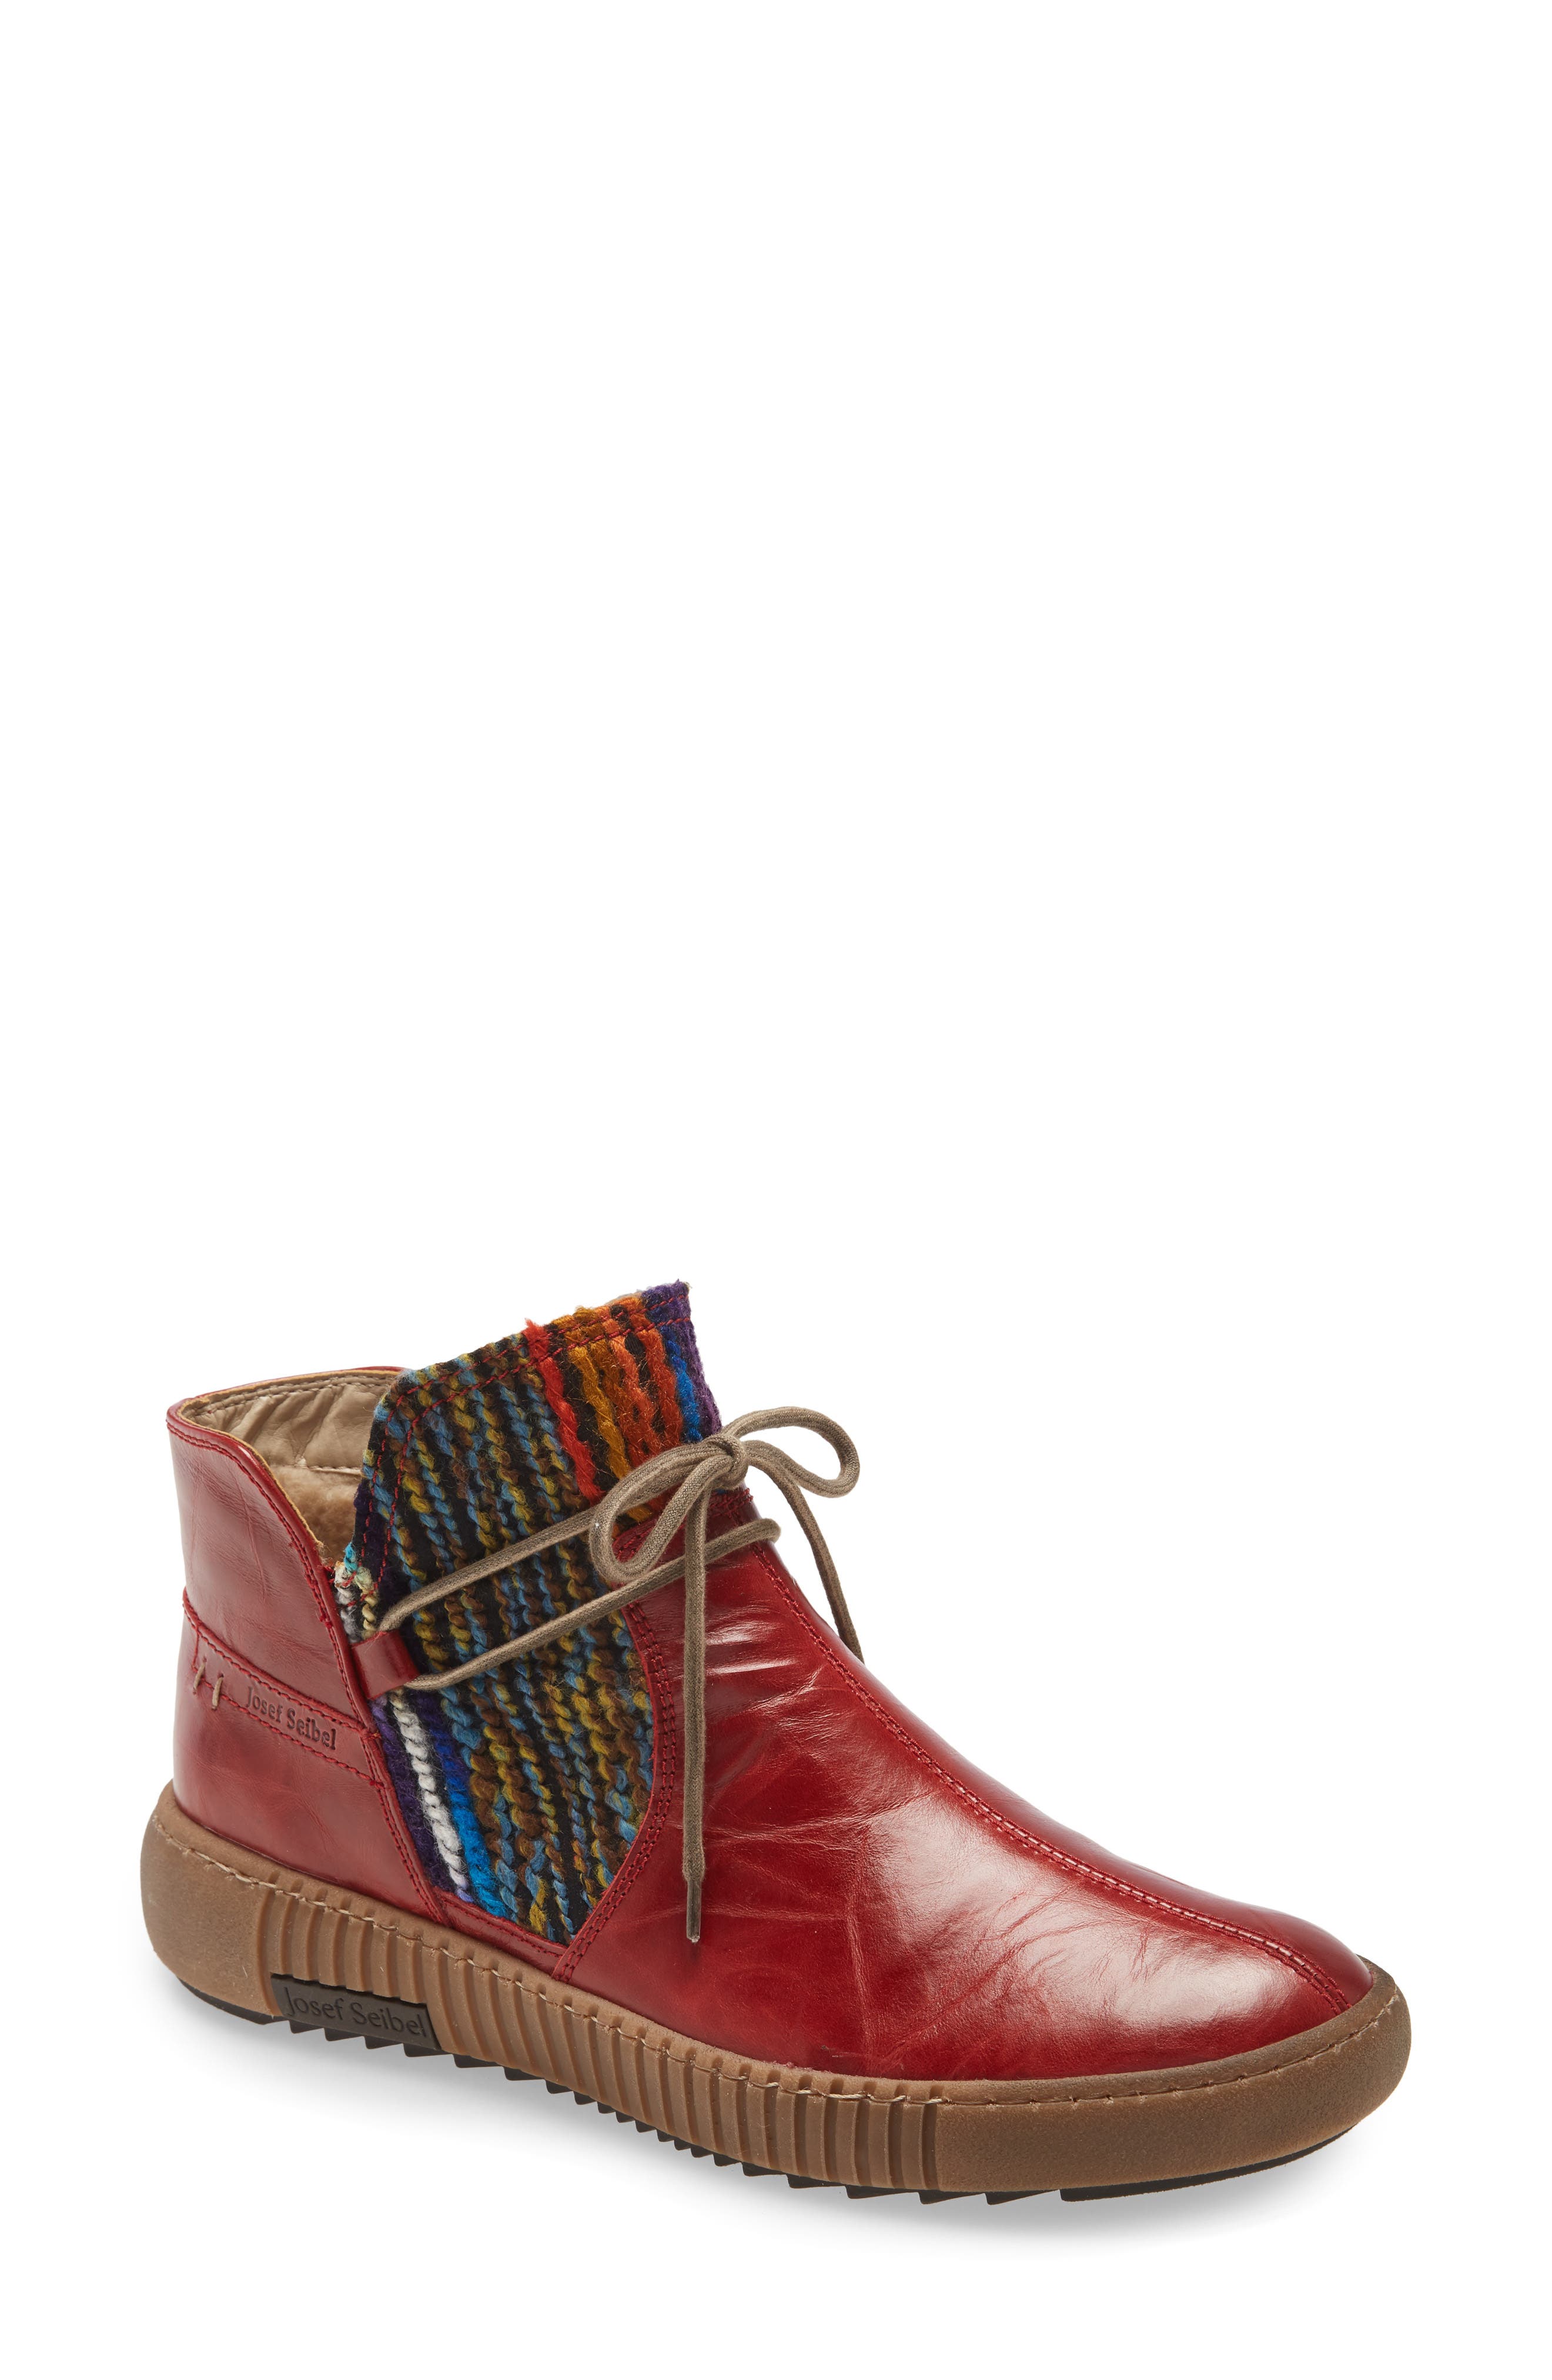 josef seibel shoes canada